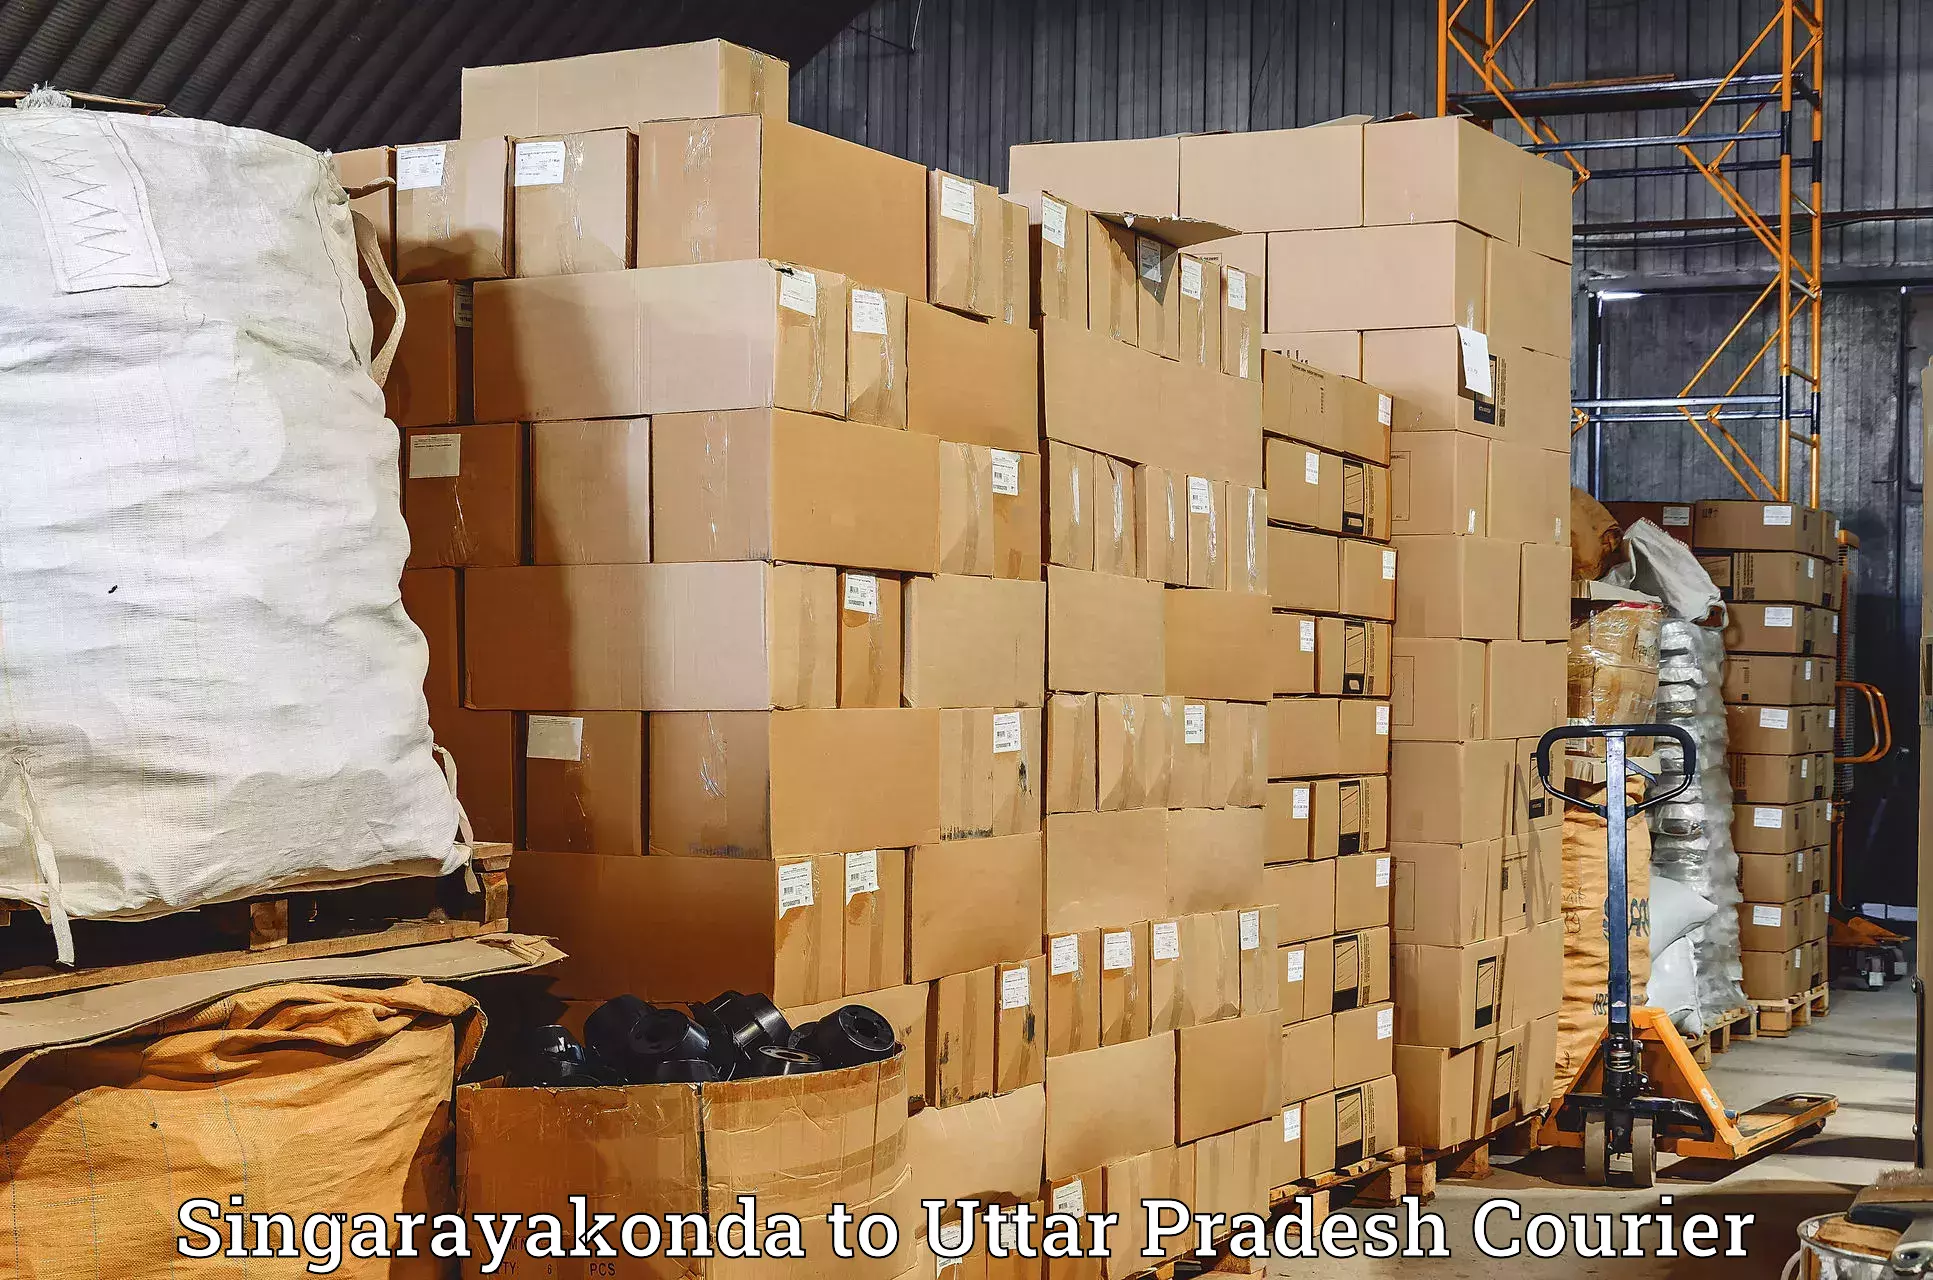 Courier service efficiency Singarayakonda to Anupshahar